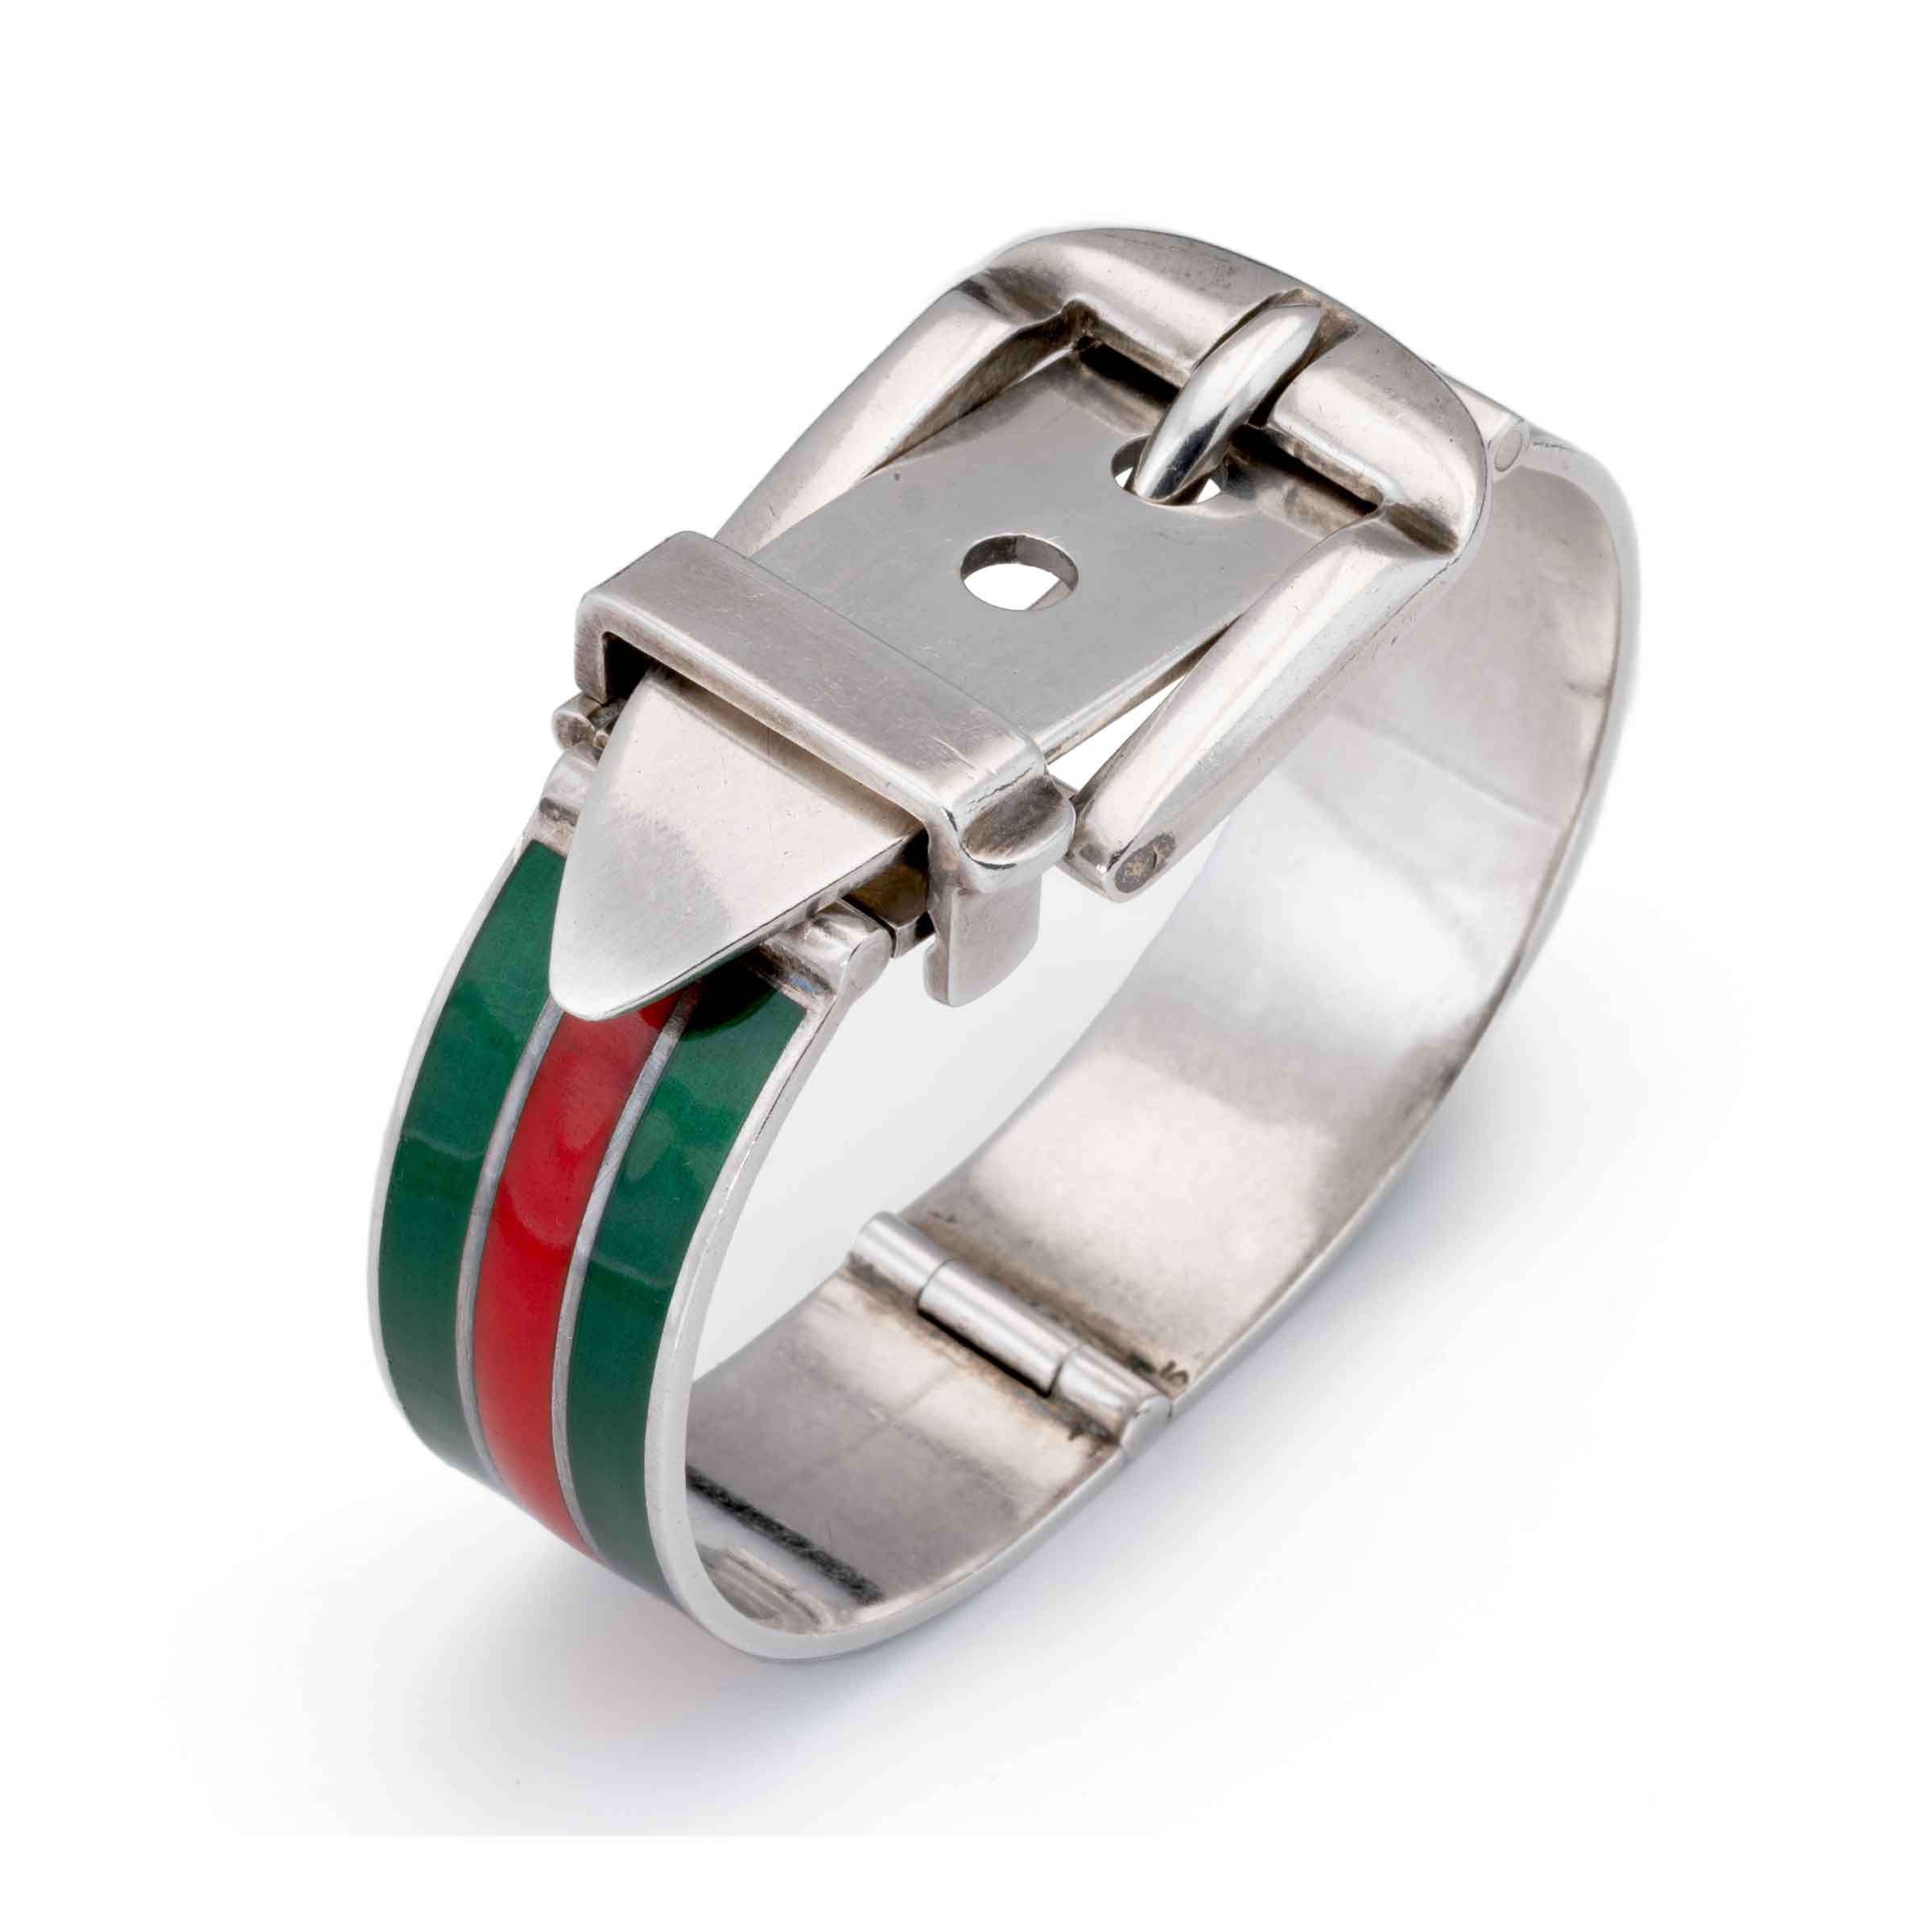 💖 Silver Tone Belt Buckle Bracelet, 8 - 9 Inches Long /B64 | Buckle  bracelet, Belt buckles, Silver tone